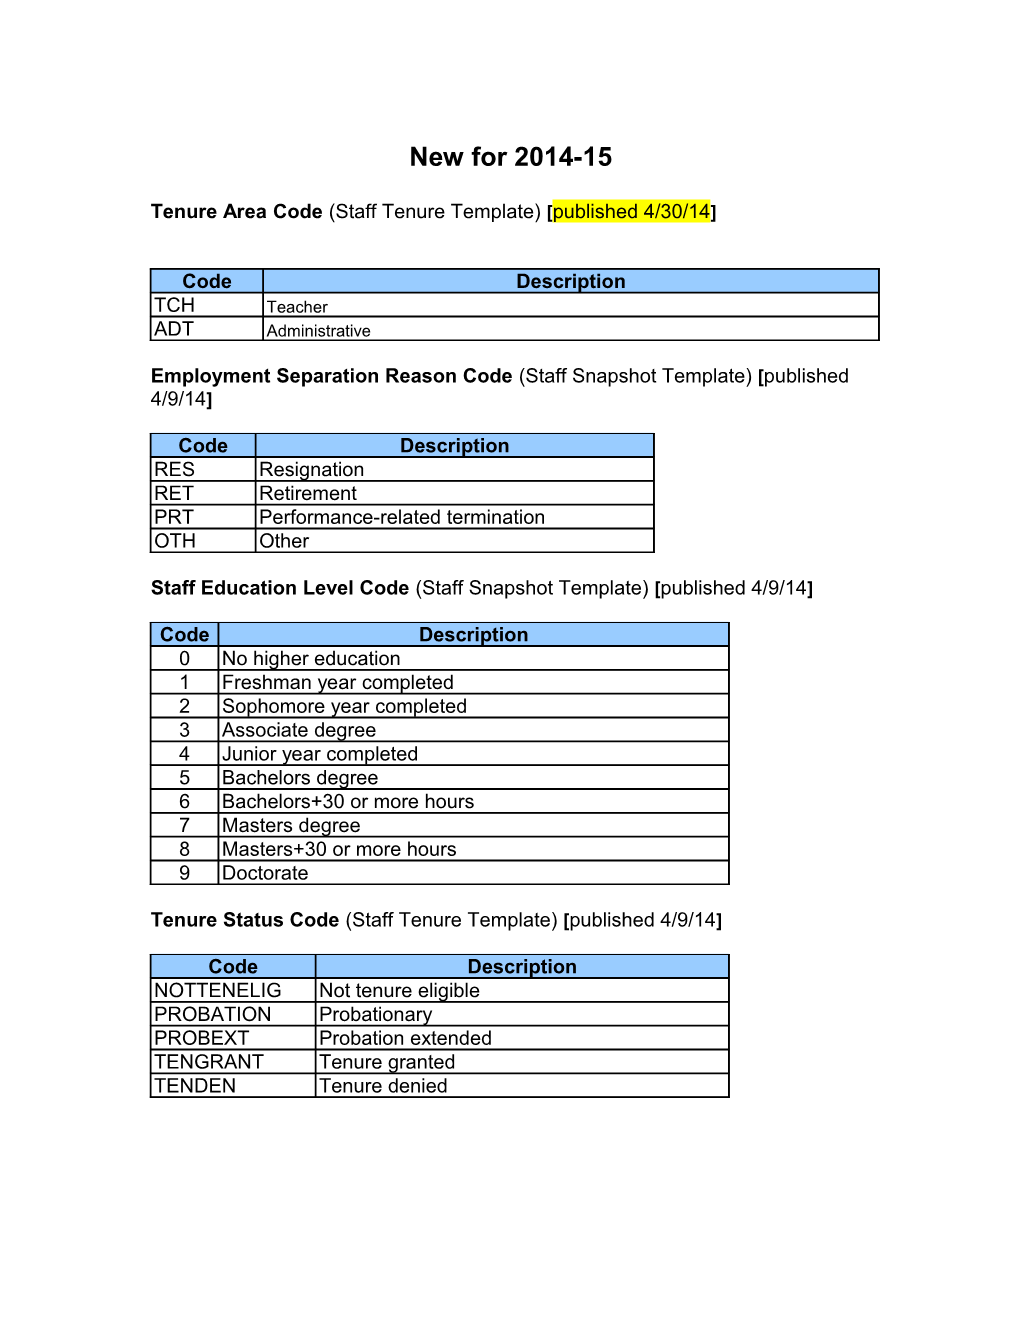 Tenure Area Code (Staff Tenure Template) Published 4/30/14